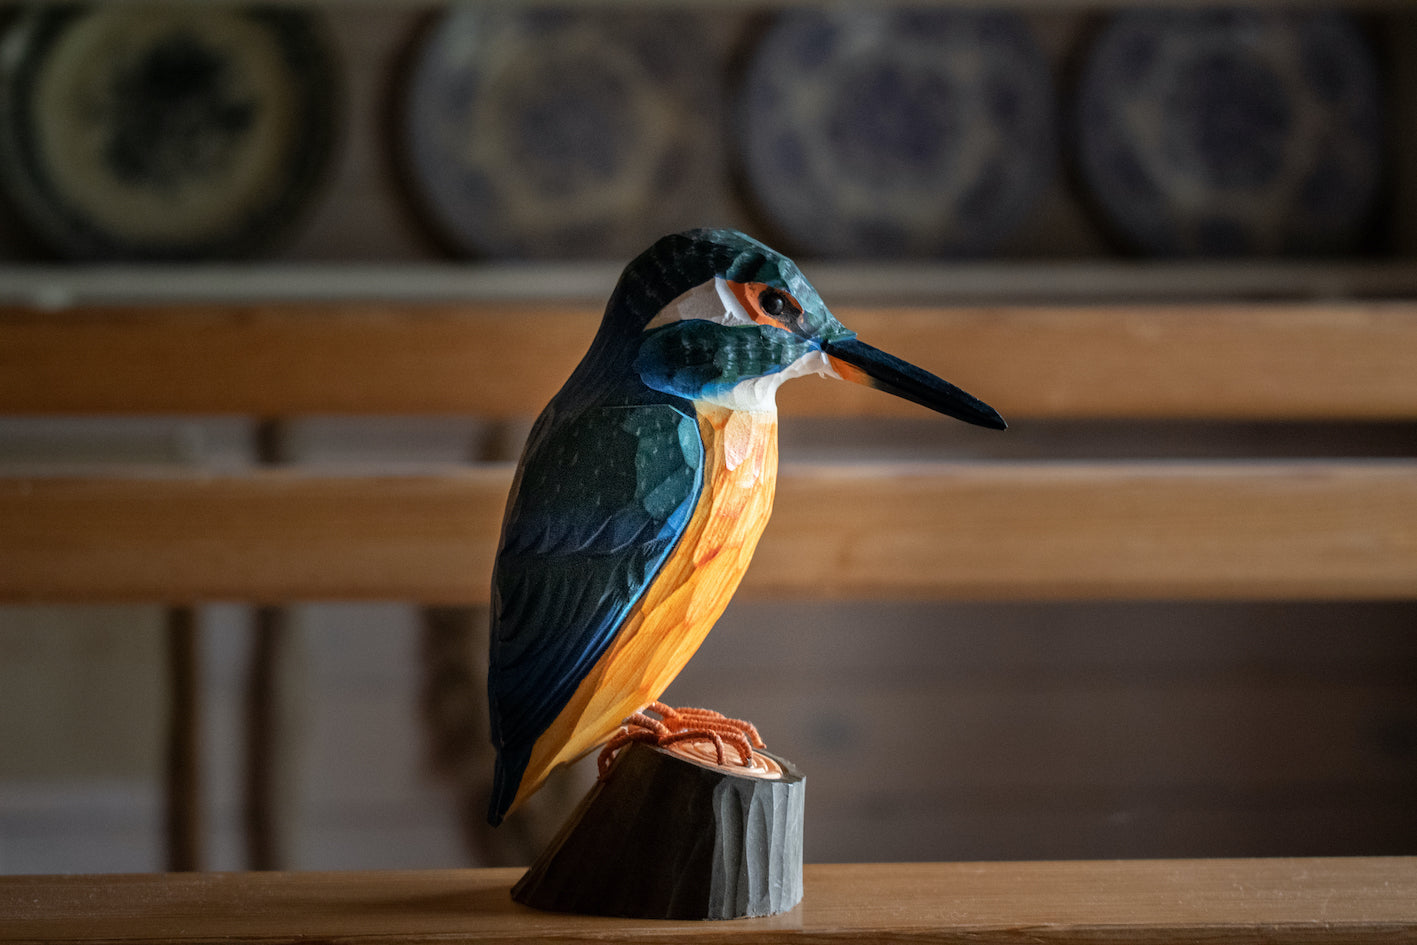 Isfugl, dekorative dyr i håndsnittet træ fra Wildlife Garden